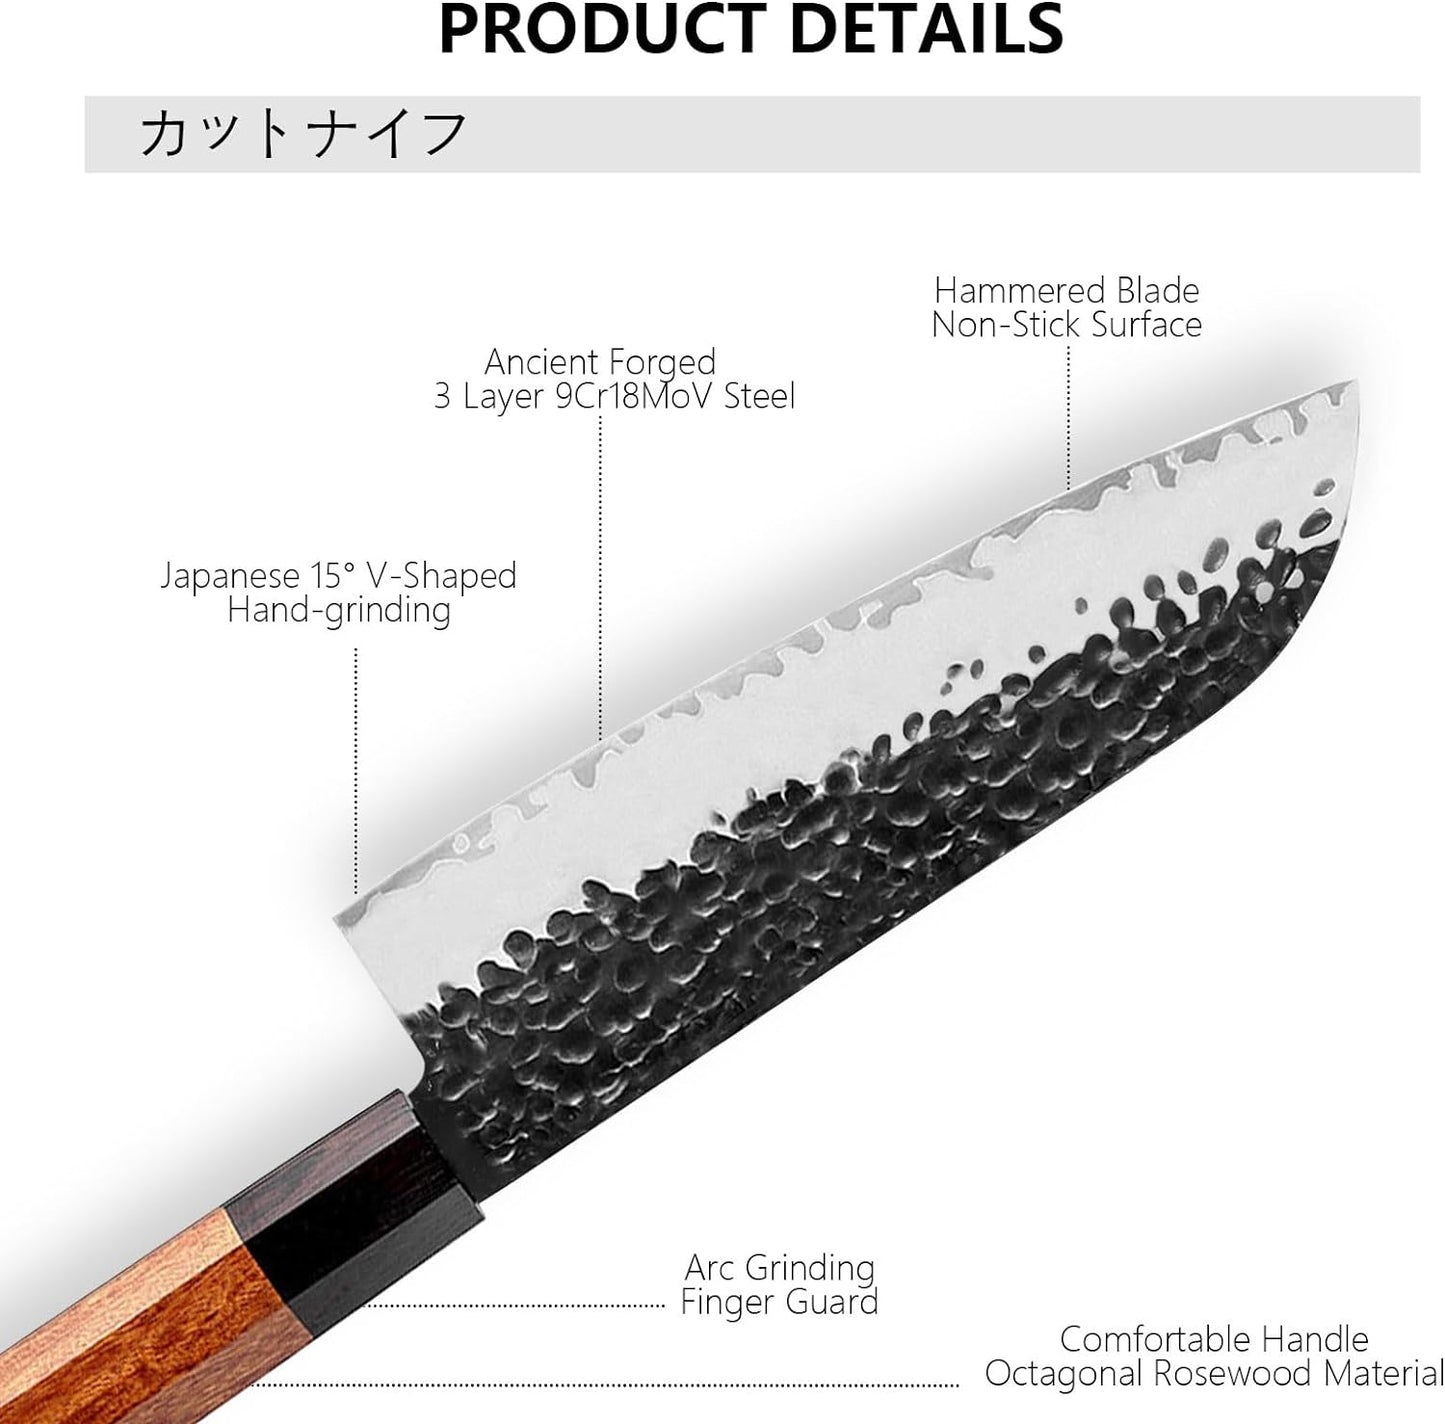 KD Japanese Santoku Chef Knife High Carbon Steel with Sheath & Gift Box